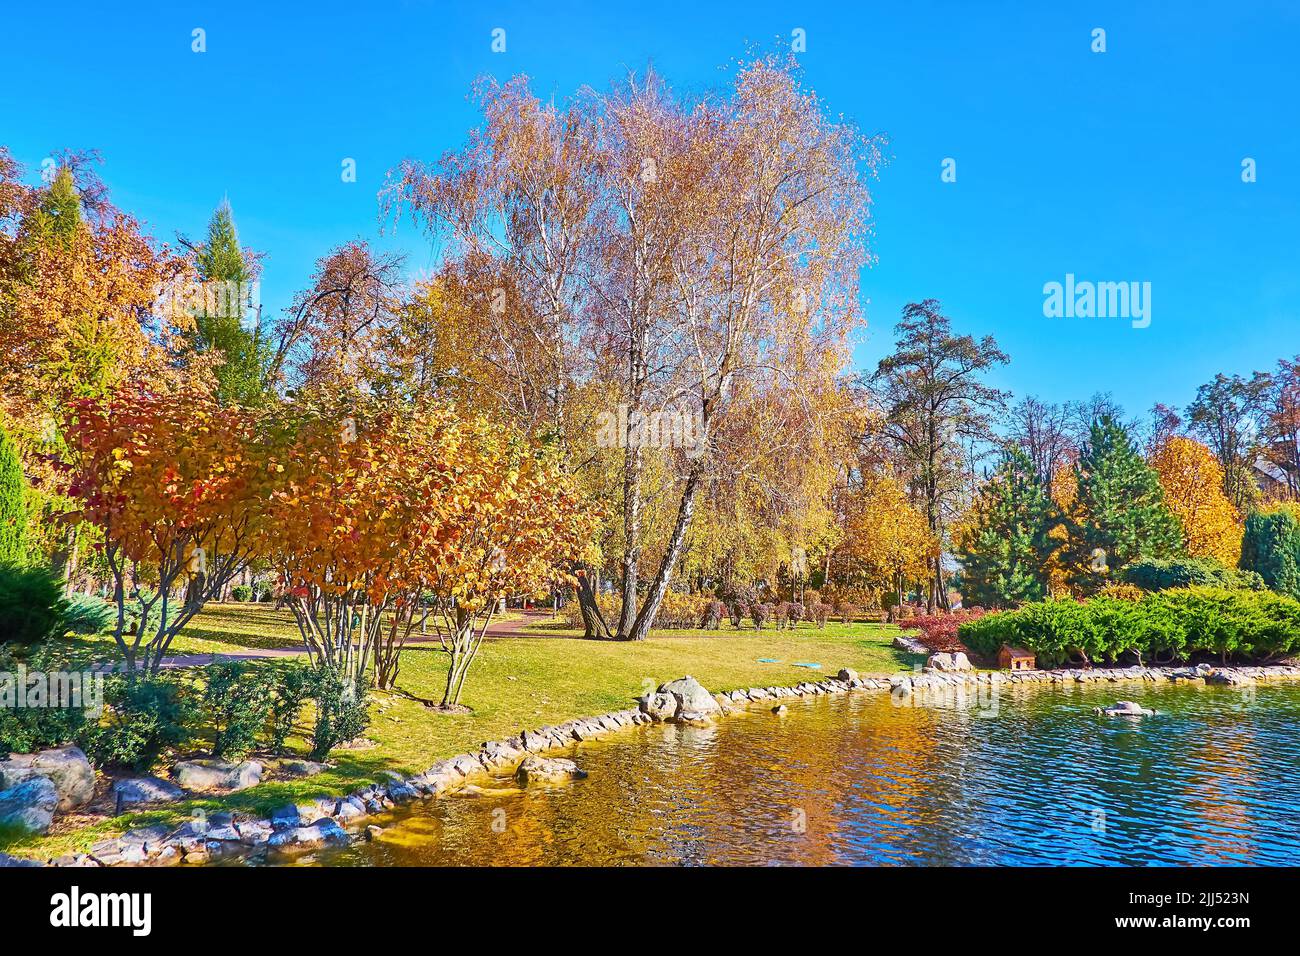 The joyful day in autumn park with a lake, golden birches, lush juniper shrubs, pines, thuja trees and maples, Mezhyhirya, Ukraine Stock Photo